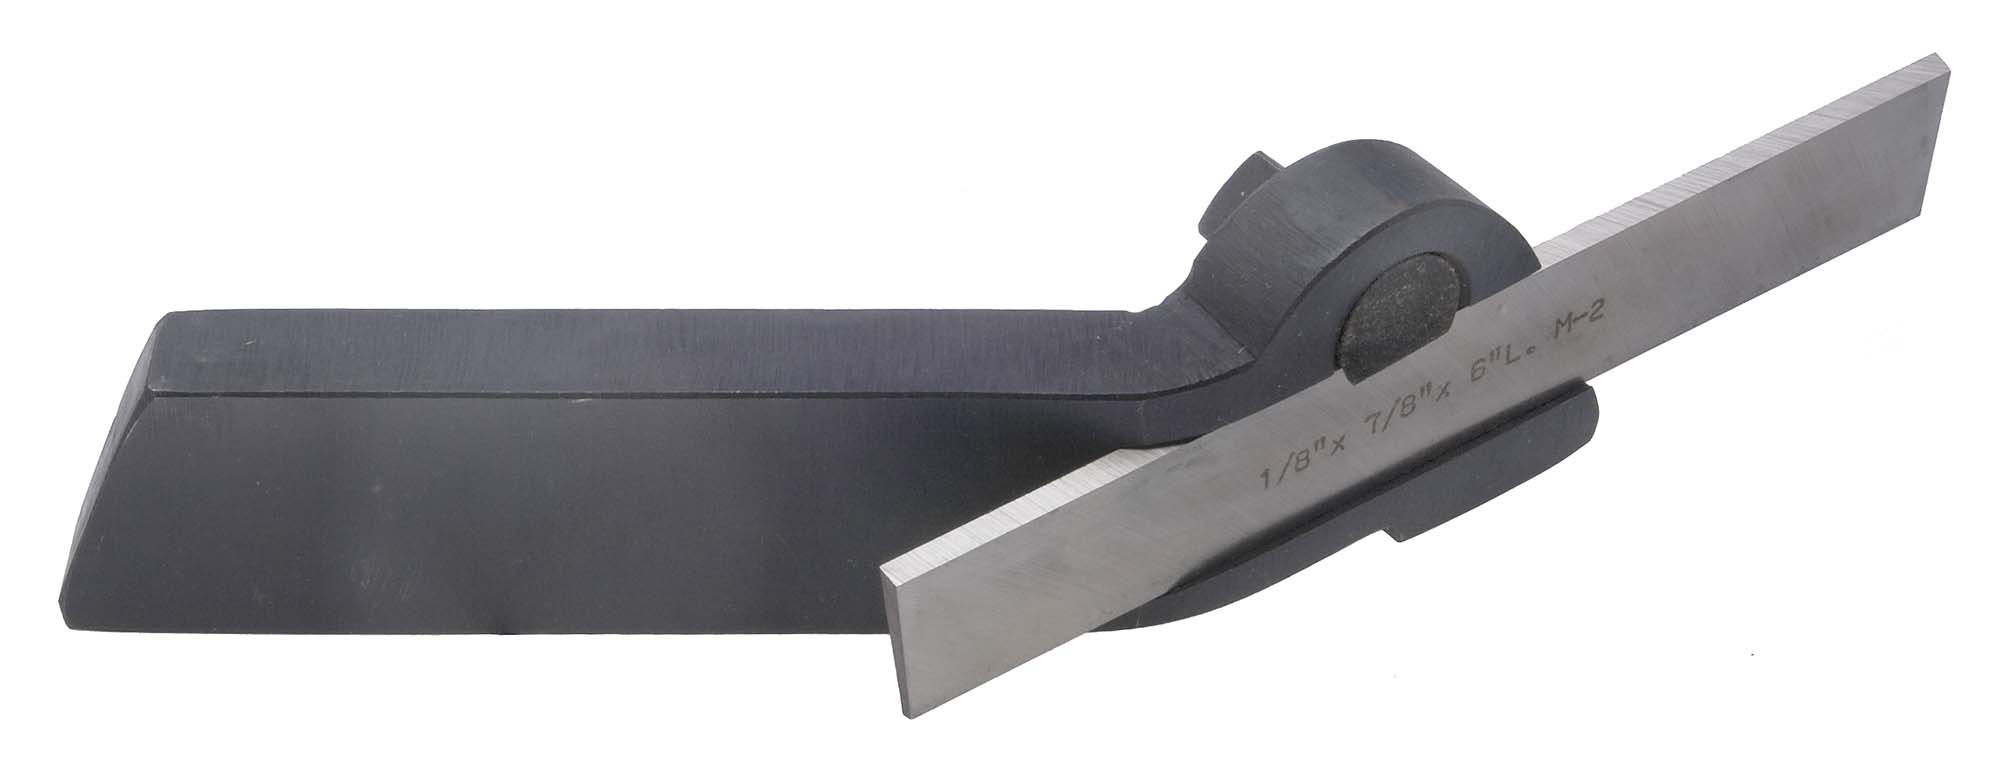 5/8 X 1-3/8 Shank Left Hand Lathe Cutoff Tool Holder, holds 1/8 x 7/8" Blades